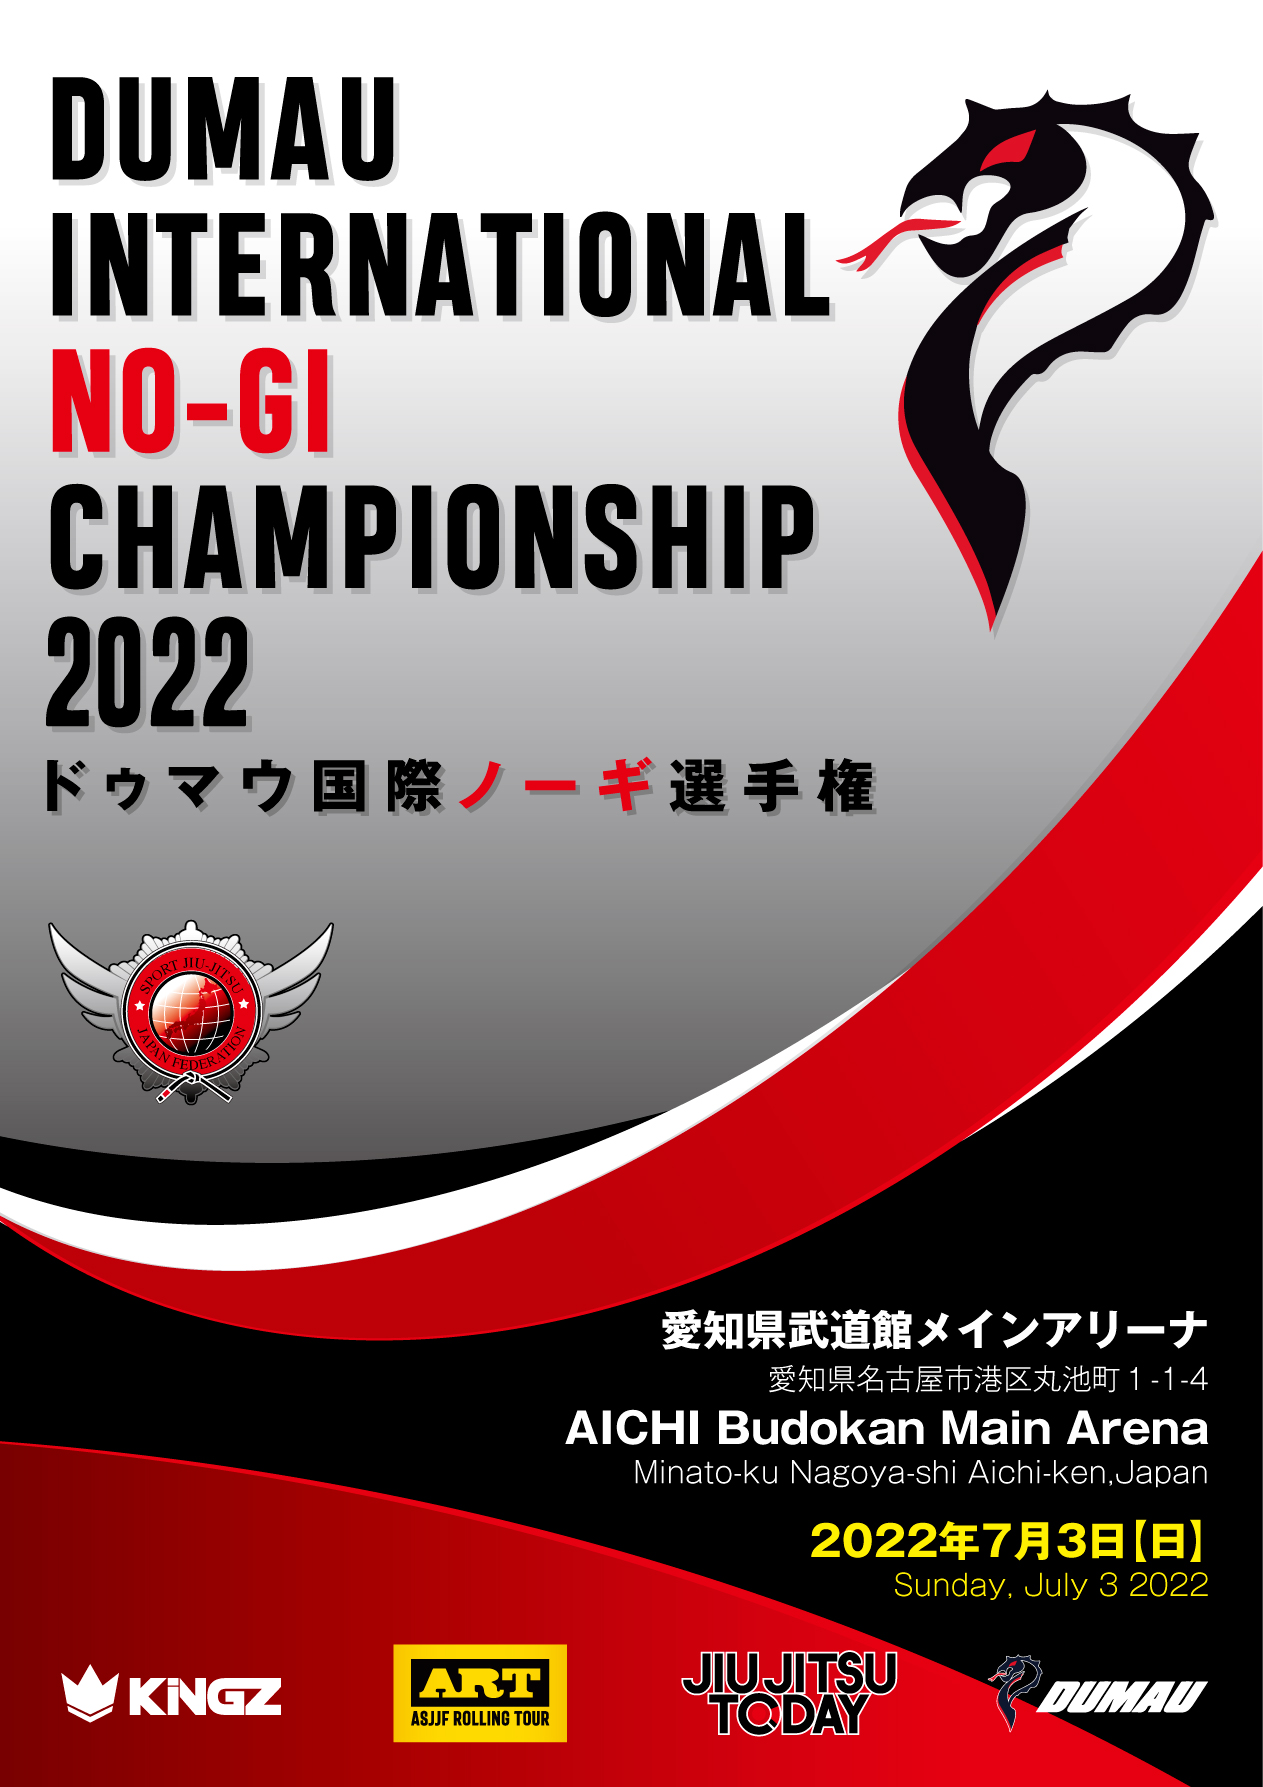 Dumau international no-gi championship 2022 (In Tokai)